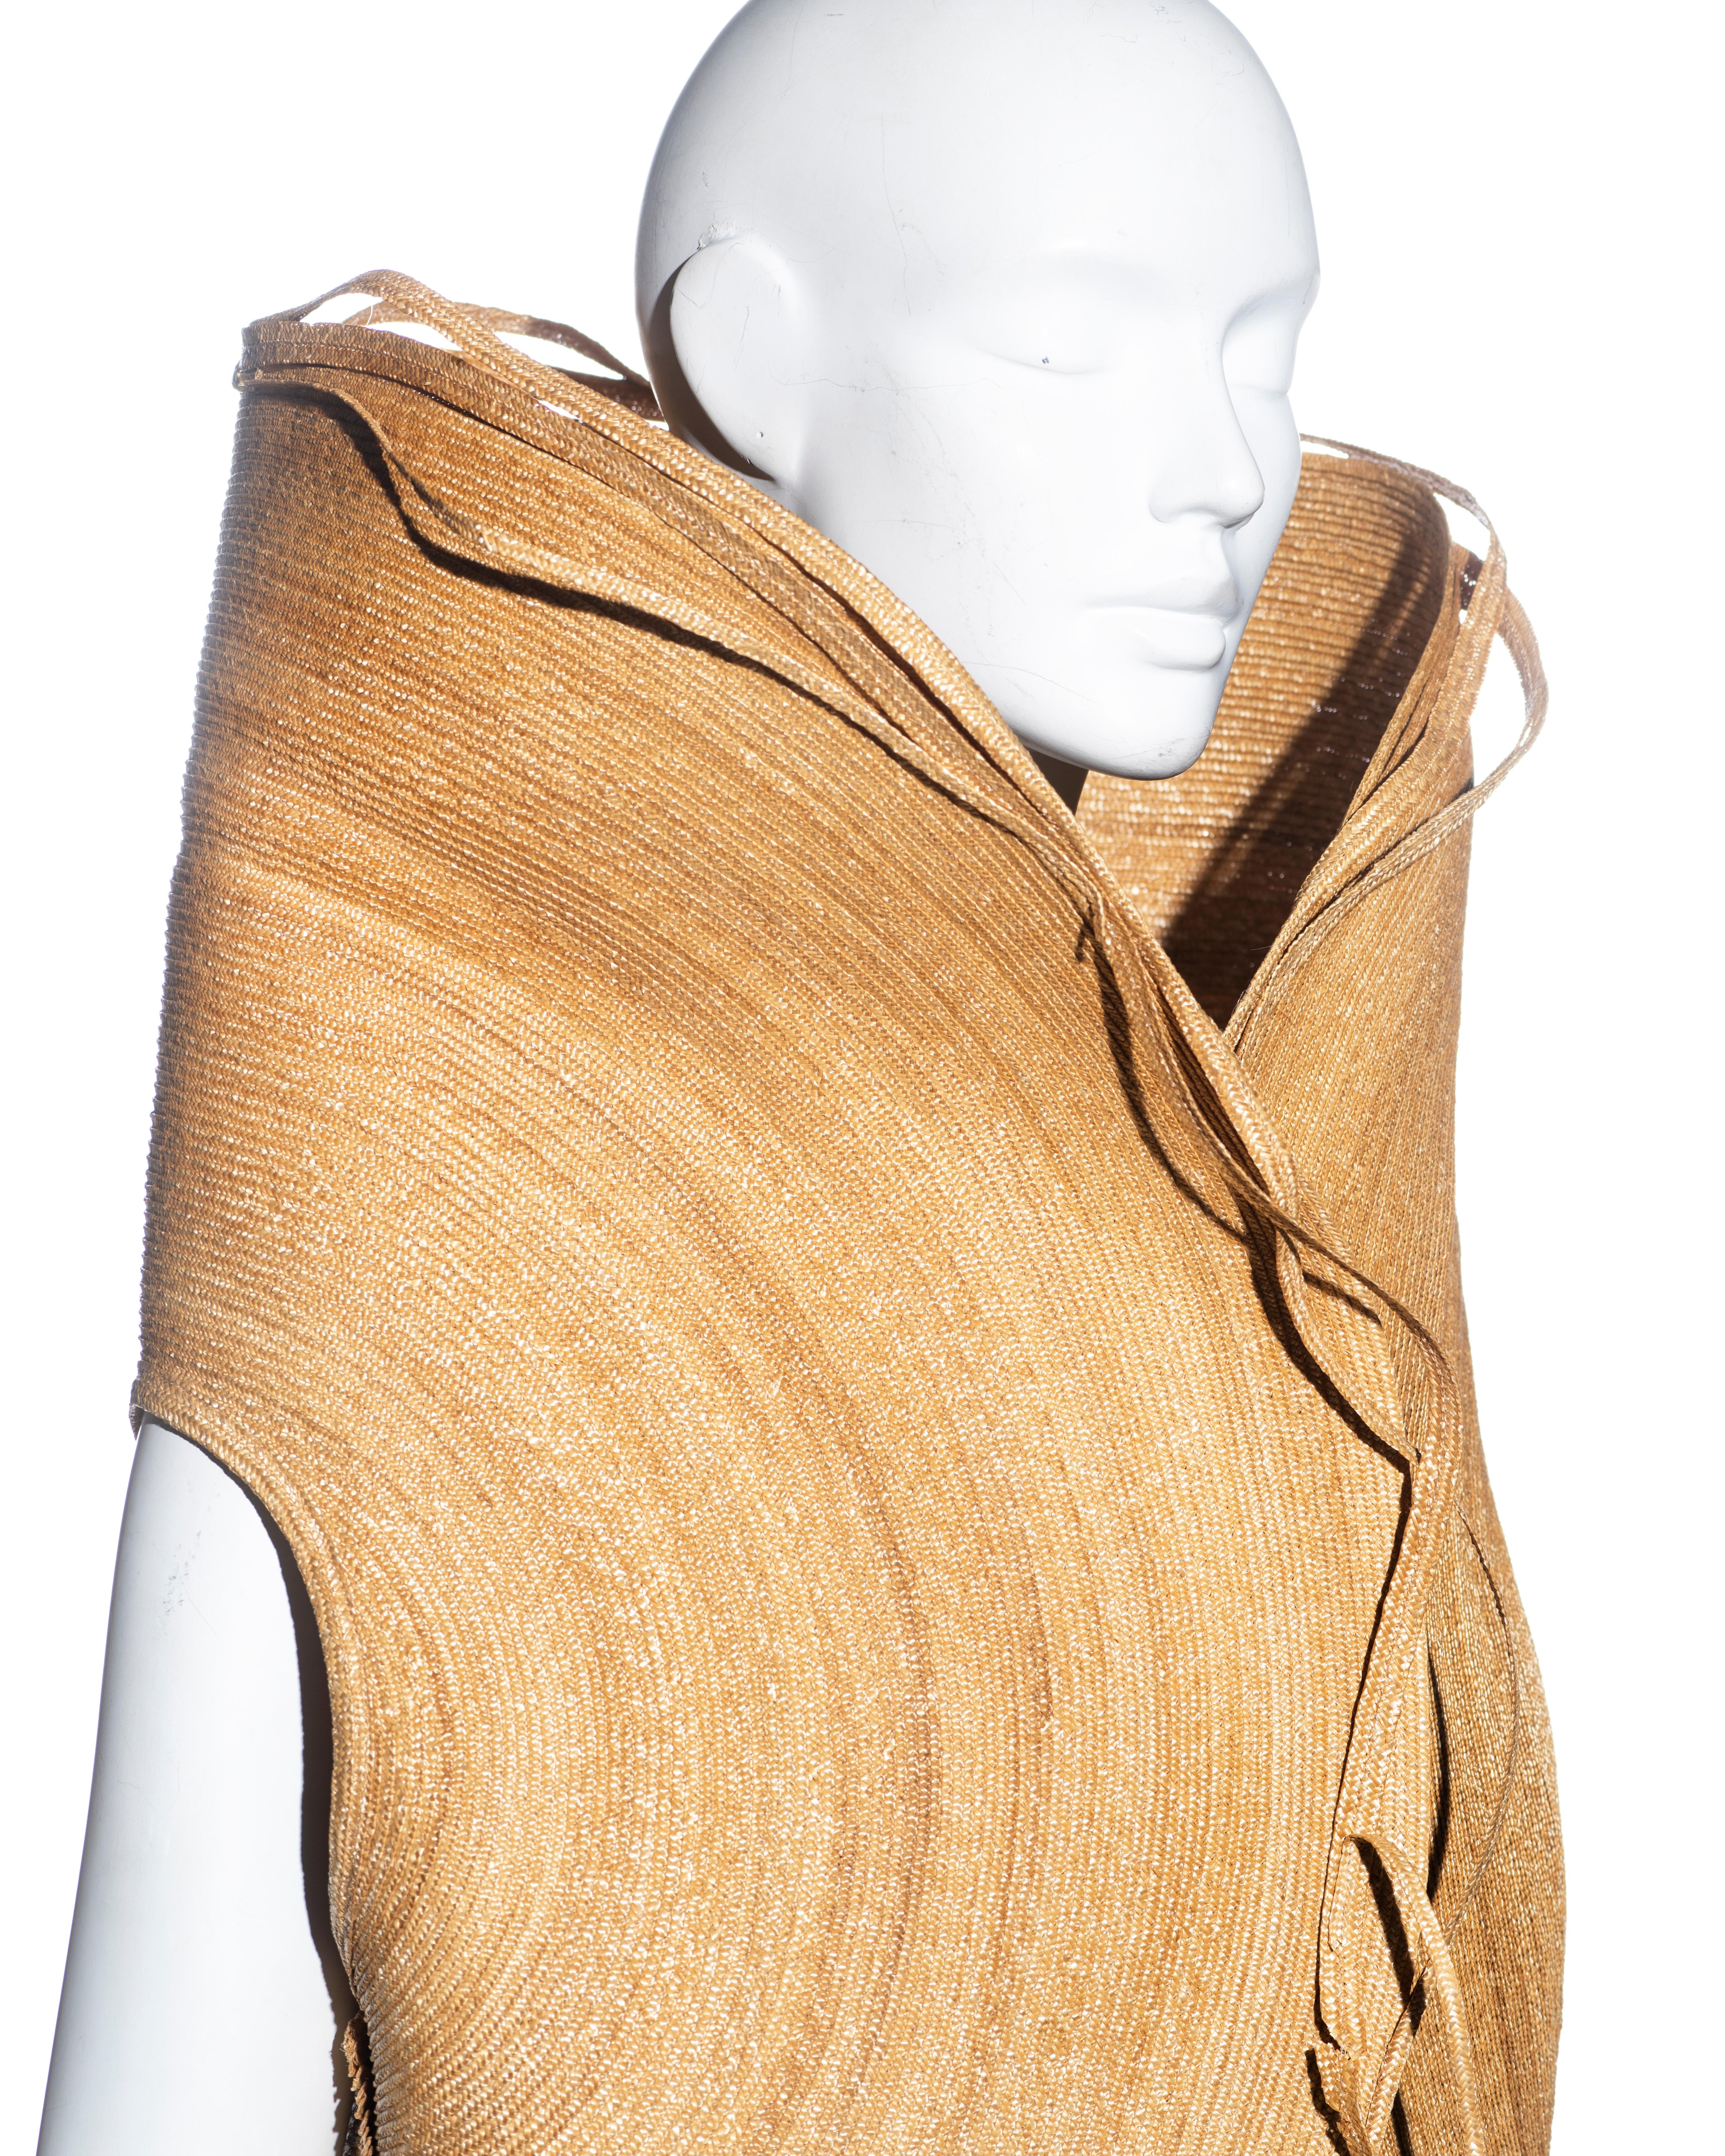 Gianfranco Ferre circular-cut straw sleeveless jacket, ss 2000 For Sale 3